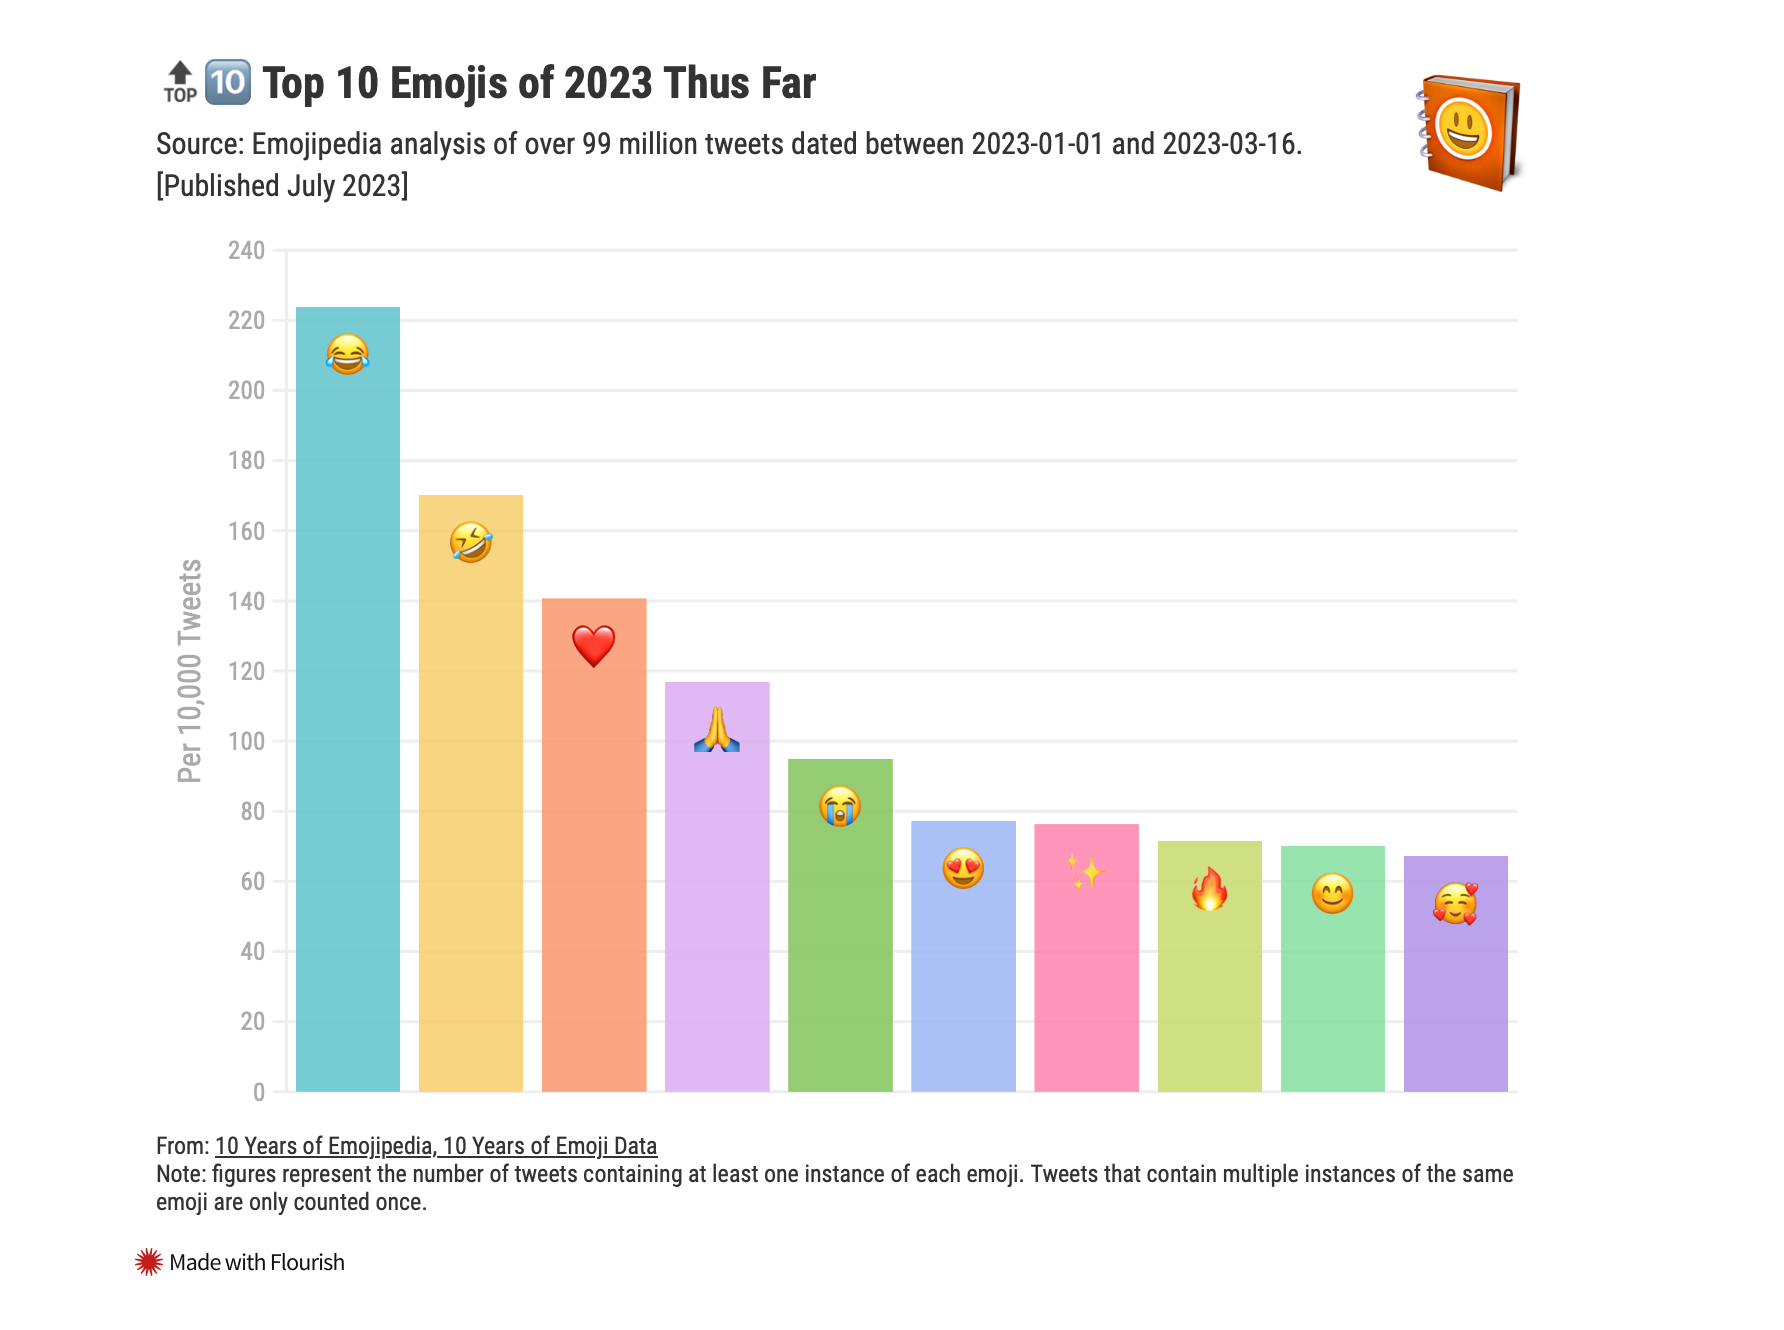 Twitter's emoji use suggests it no longer leads internet culture